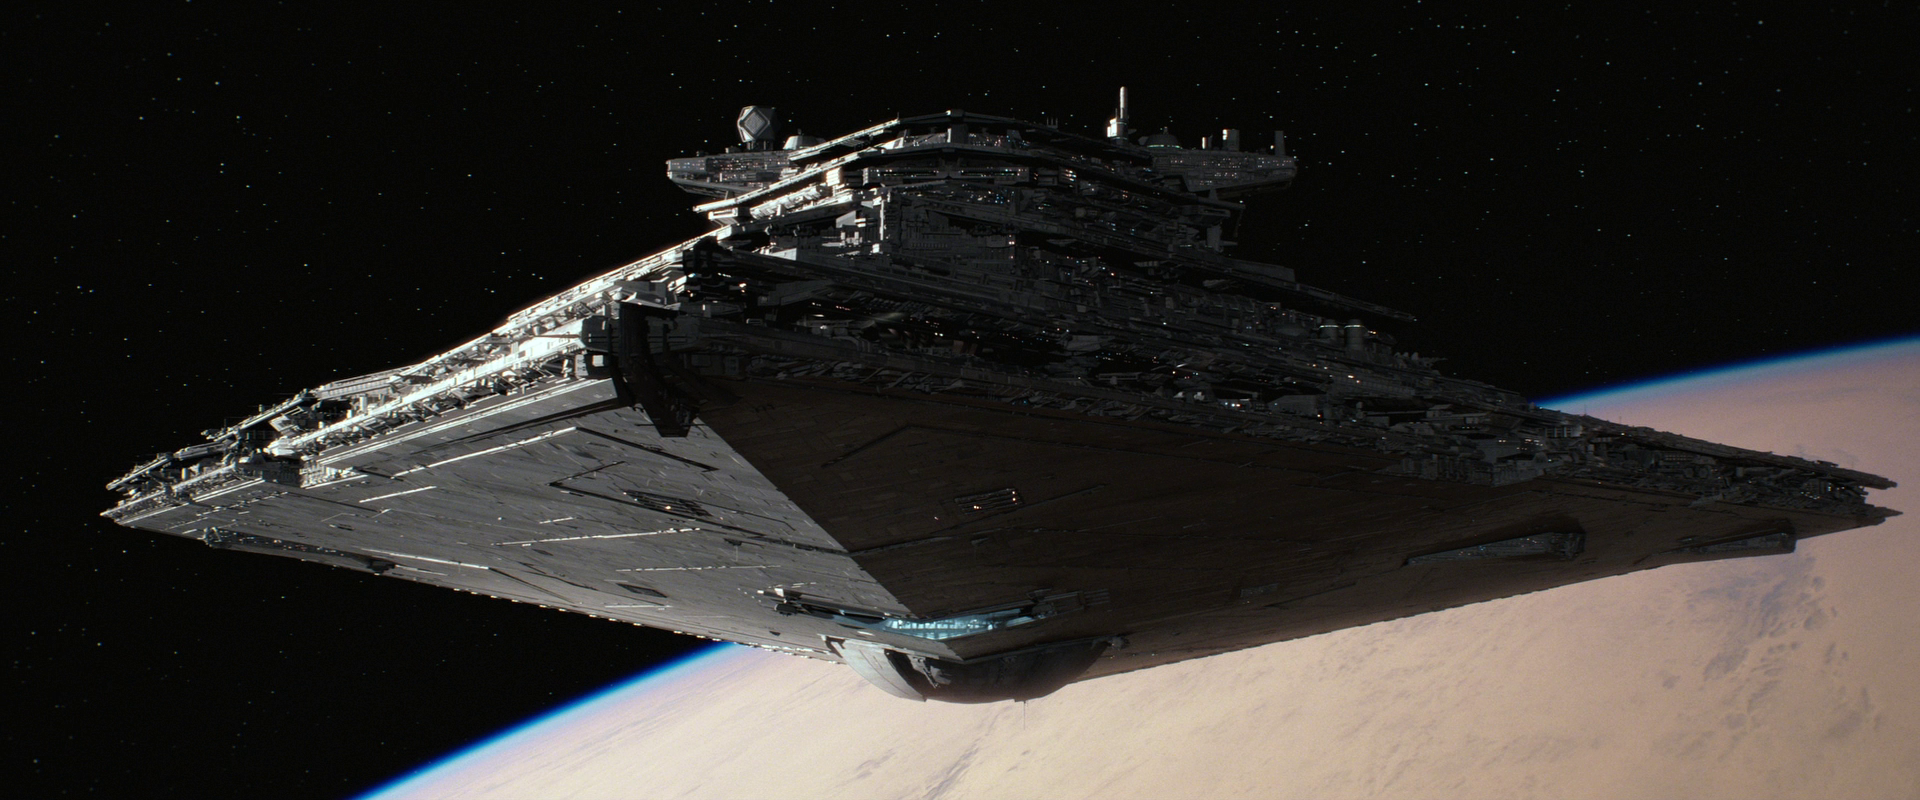 First Order Resurgent Class Star Destroyer. Star Wars Picture, Star Wars Planets, Star Wars Vehicles